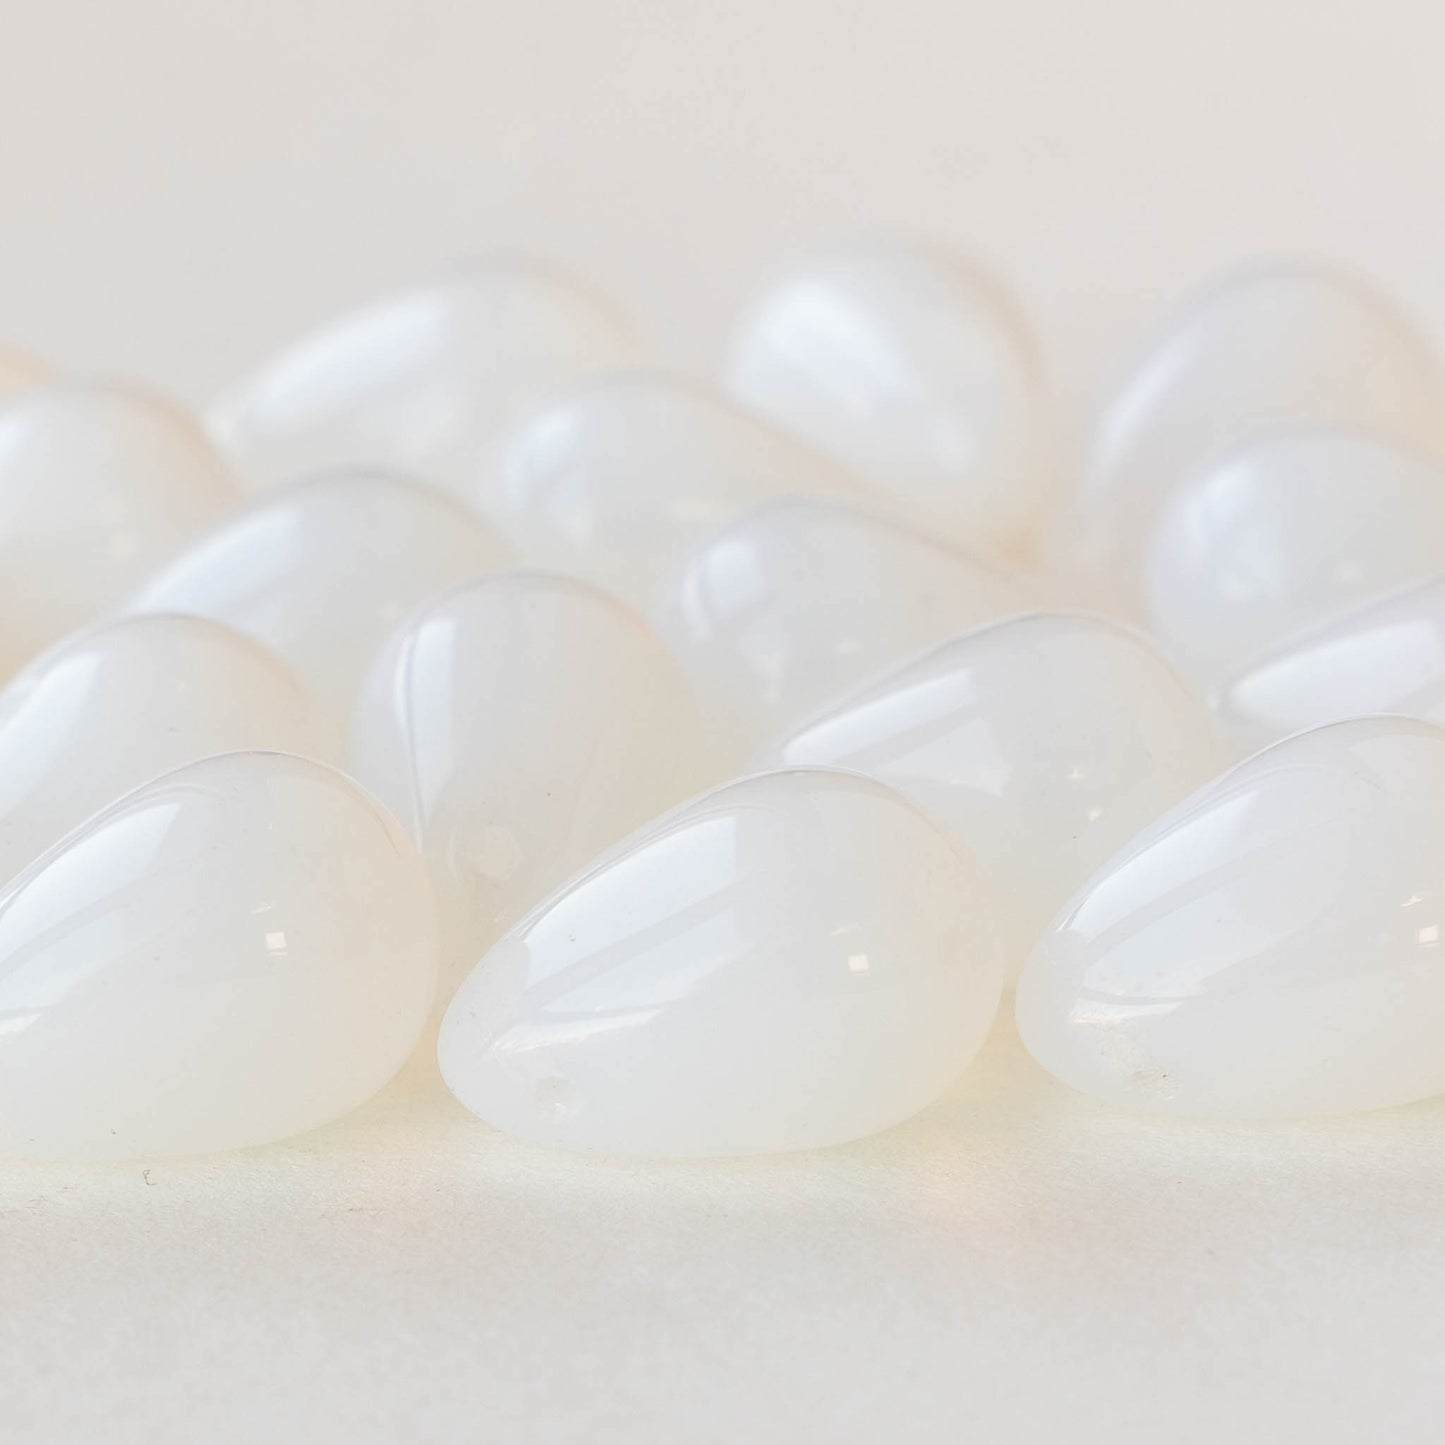 12x18mm Glass Teardrop Beads - White Opal - 10 Beads